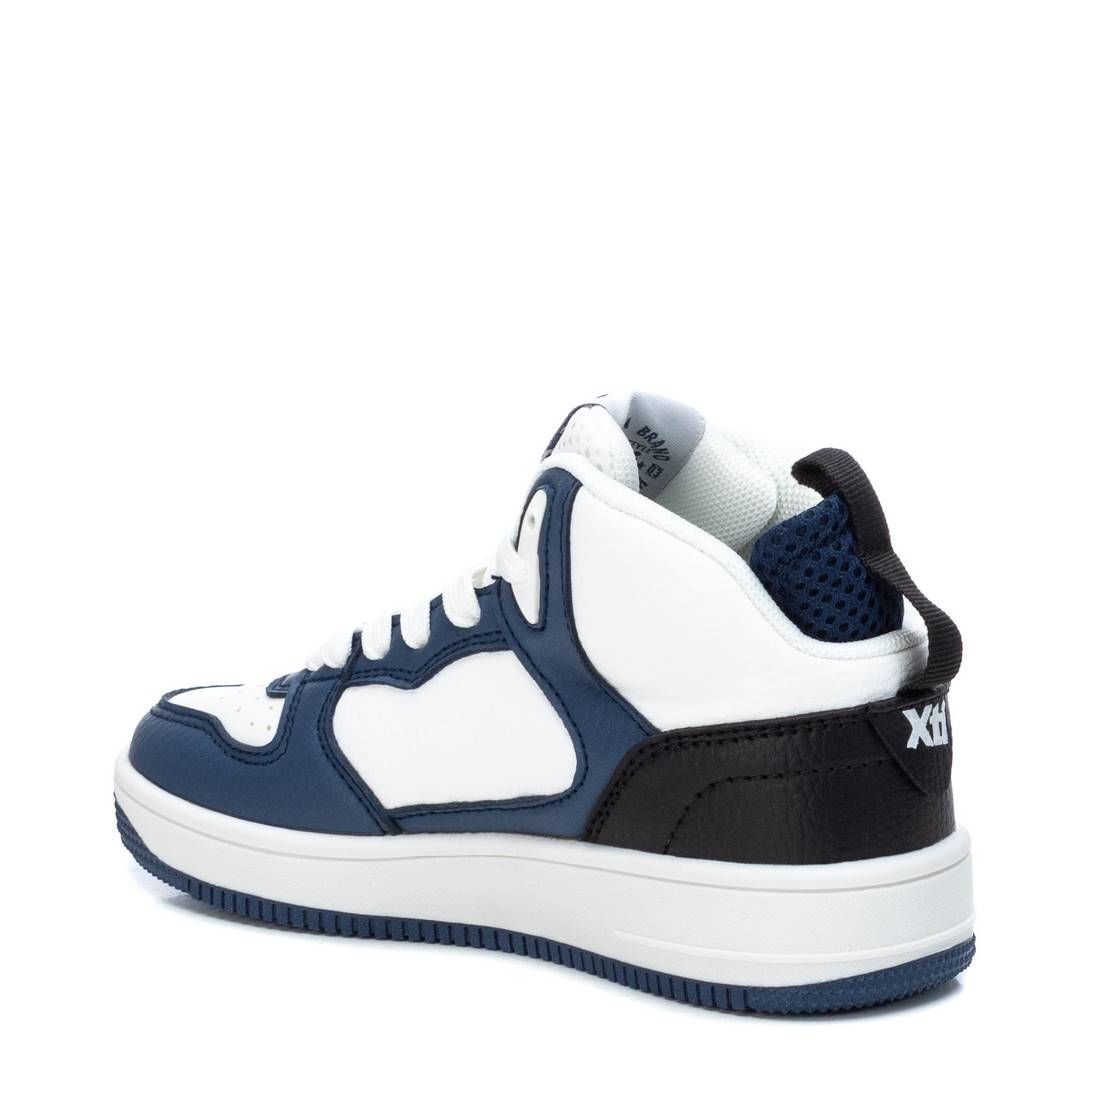 Giày Sneakers Kids PU Sporty Navy S32